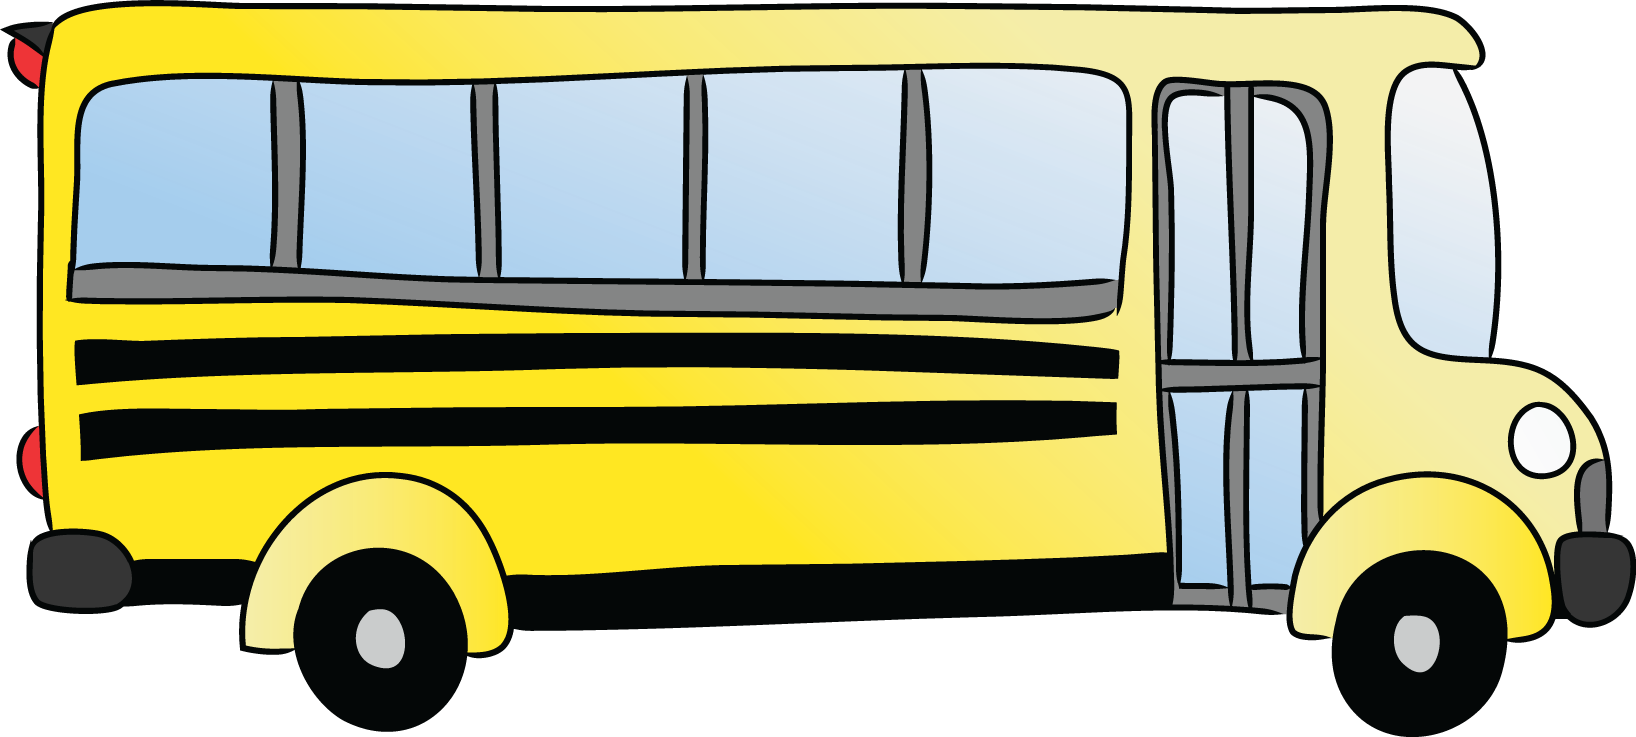 clip art of cartoon bus - photo #21